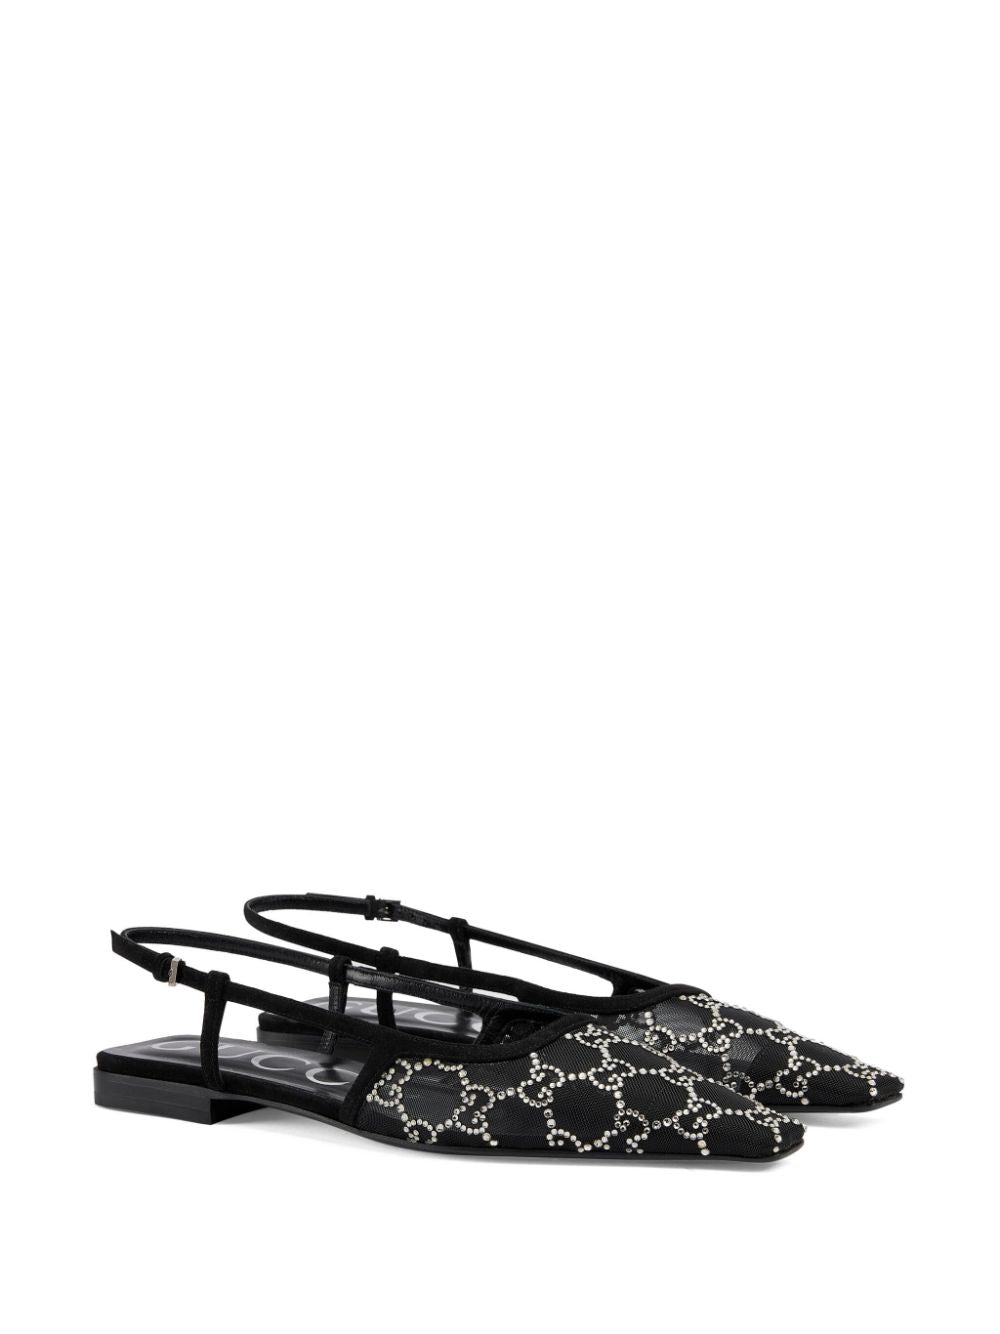 Gucci Black Leather Crystal Embellished Pointed Toe Slingback Flats